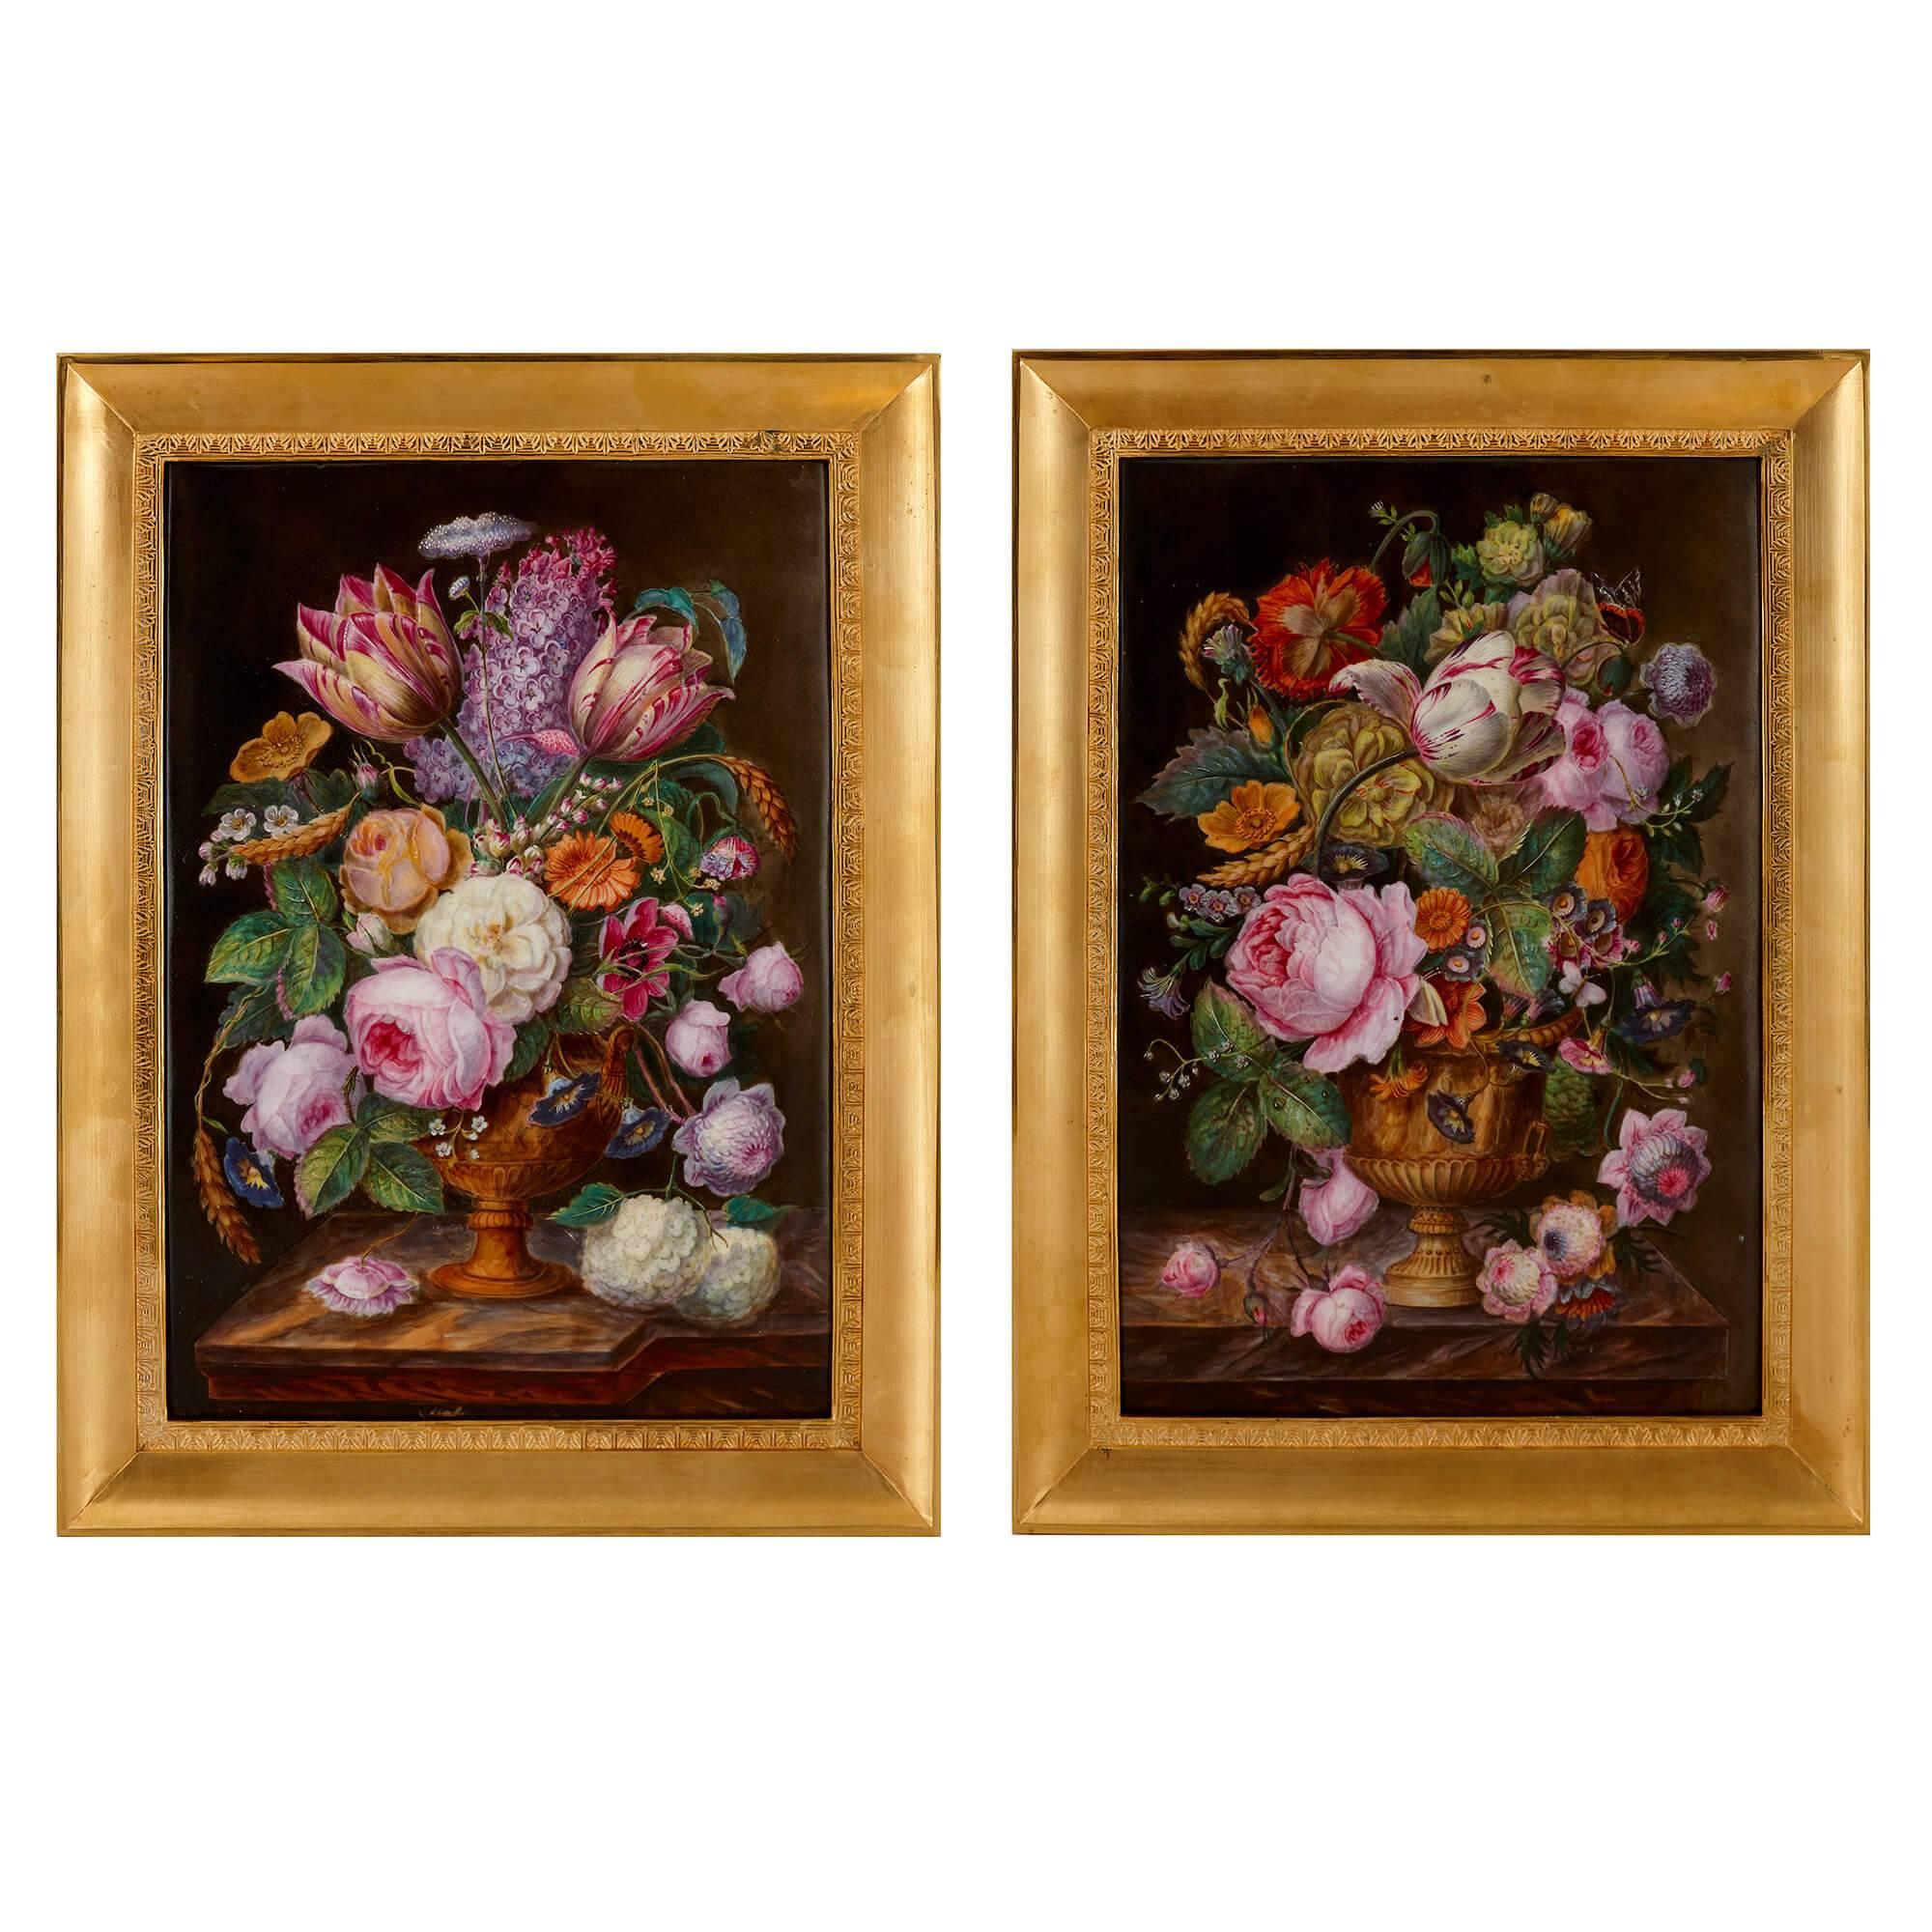 Two Antique Painted Porcelain Plaques of Flowers